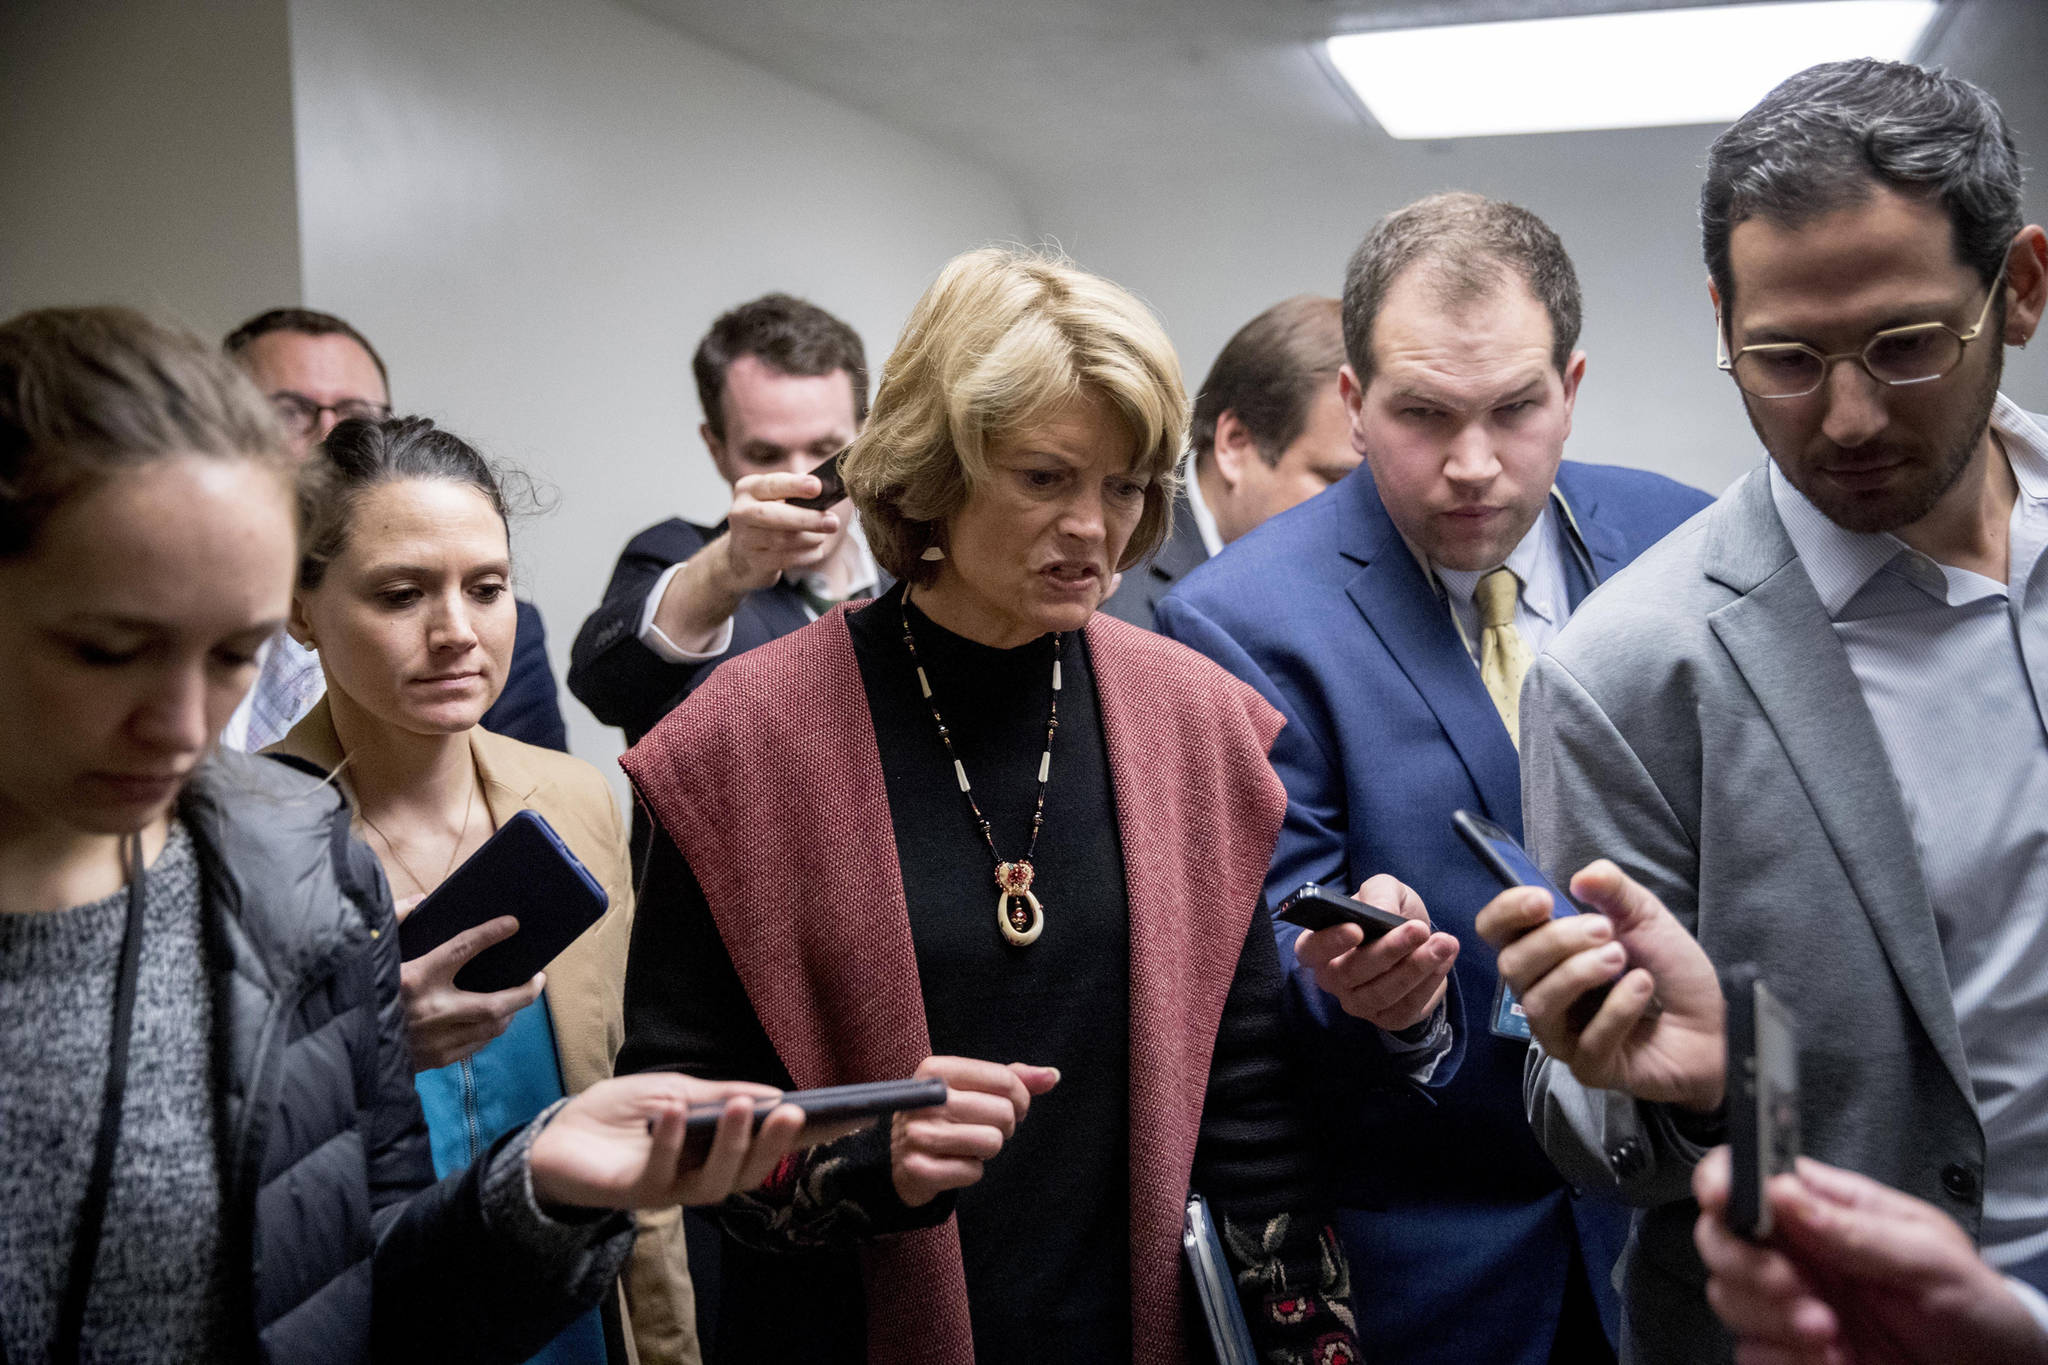 Sen. Lisa Murkowski, R-Alaska, speaks to reporters as she arrives at the U.S. Capitol building on Capitol Hill in Washington, D.C. on Thursday, Jan. 24, 2019. (Andrew Harnik | Associated Press)